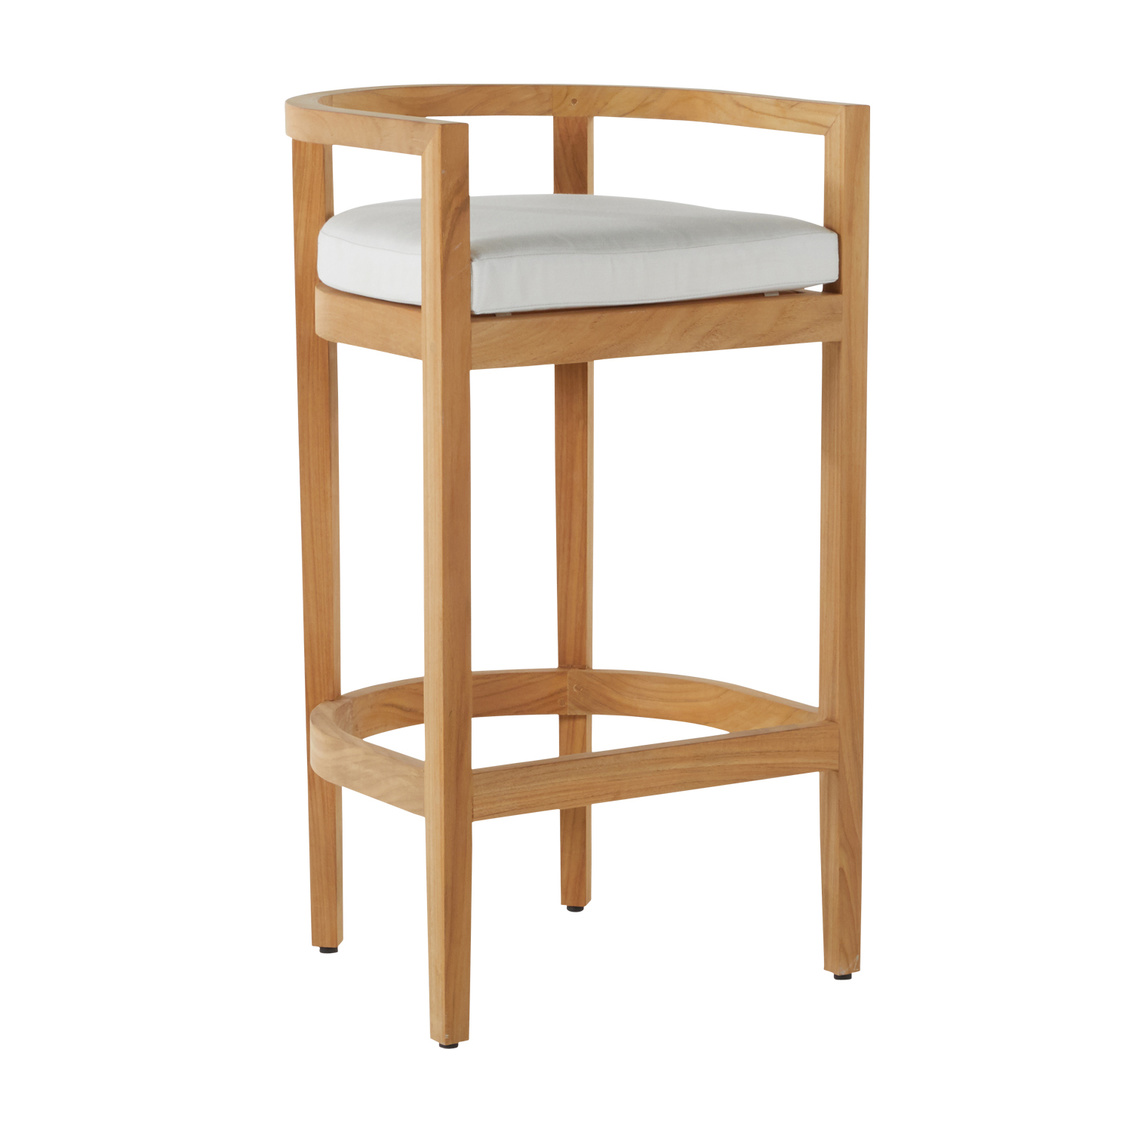 santa barbara teak 30 inch barrel bar stool in natural teak – frame only product image